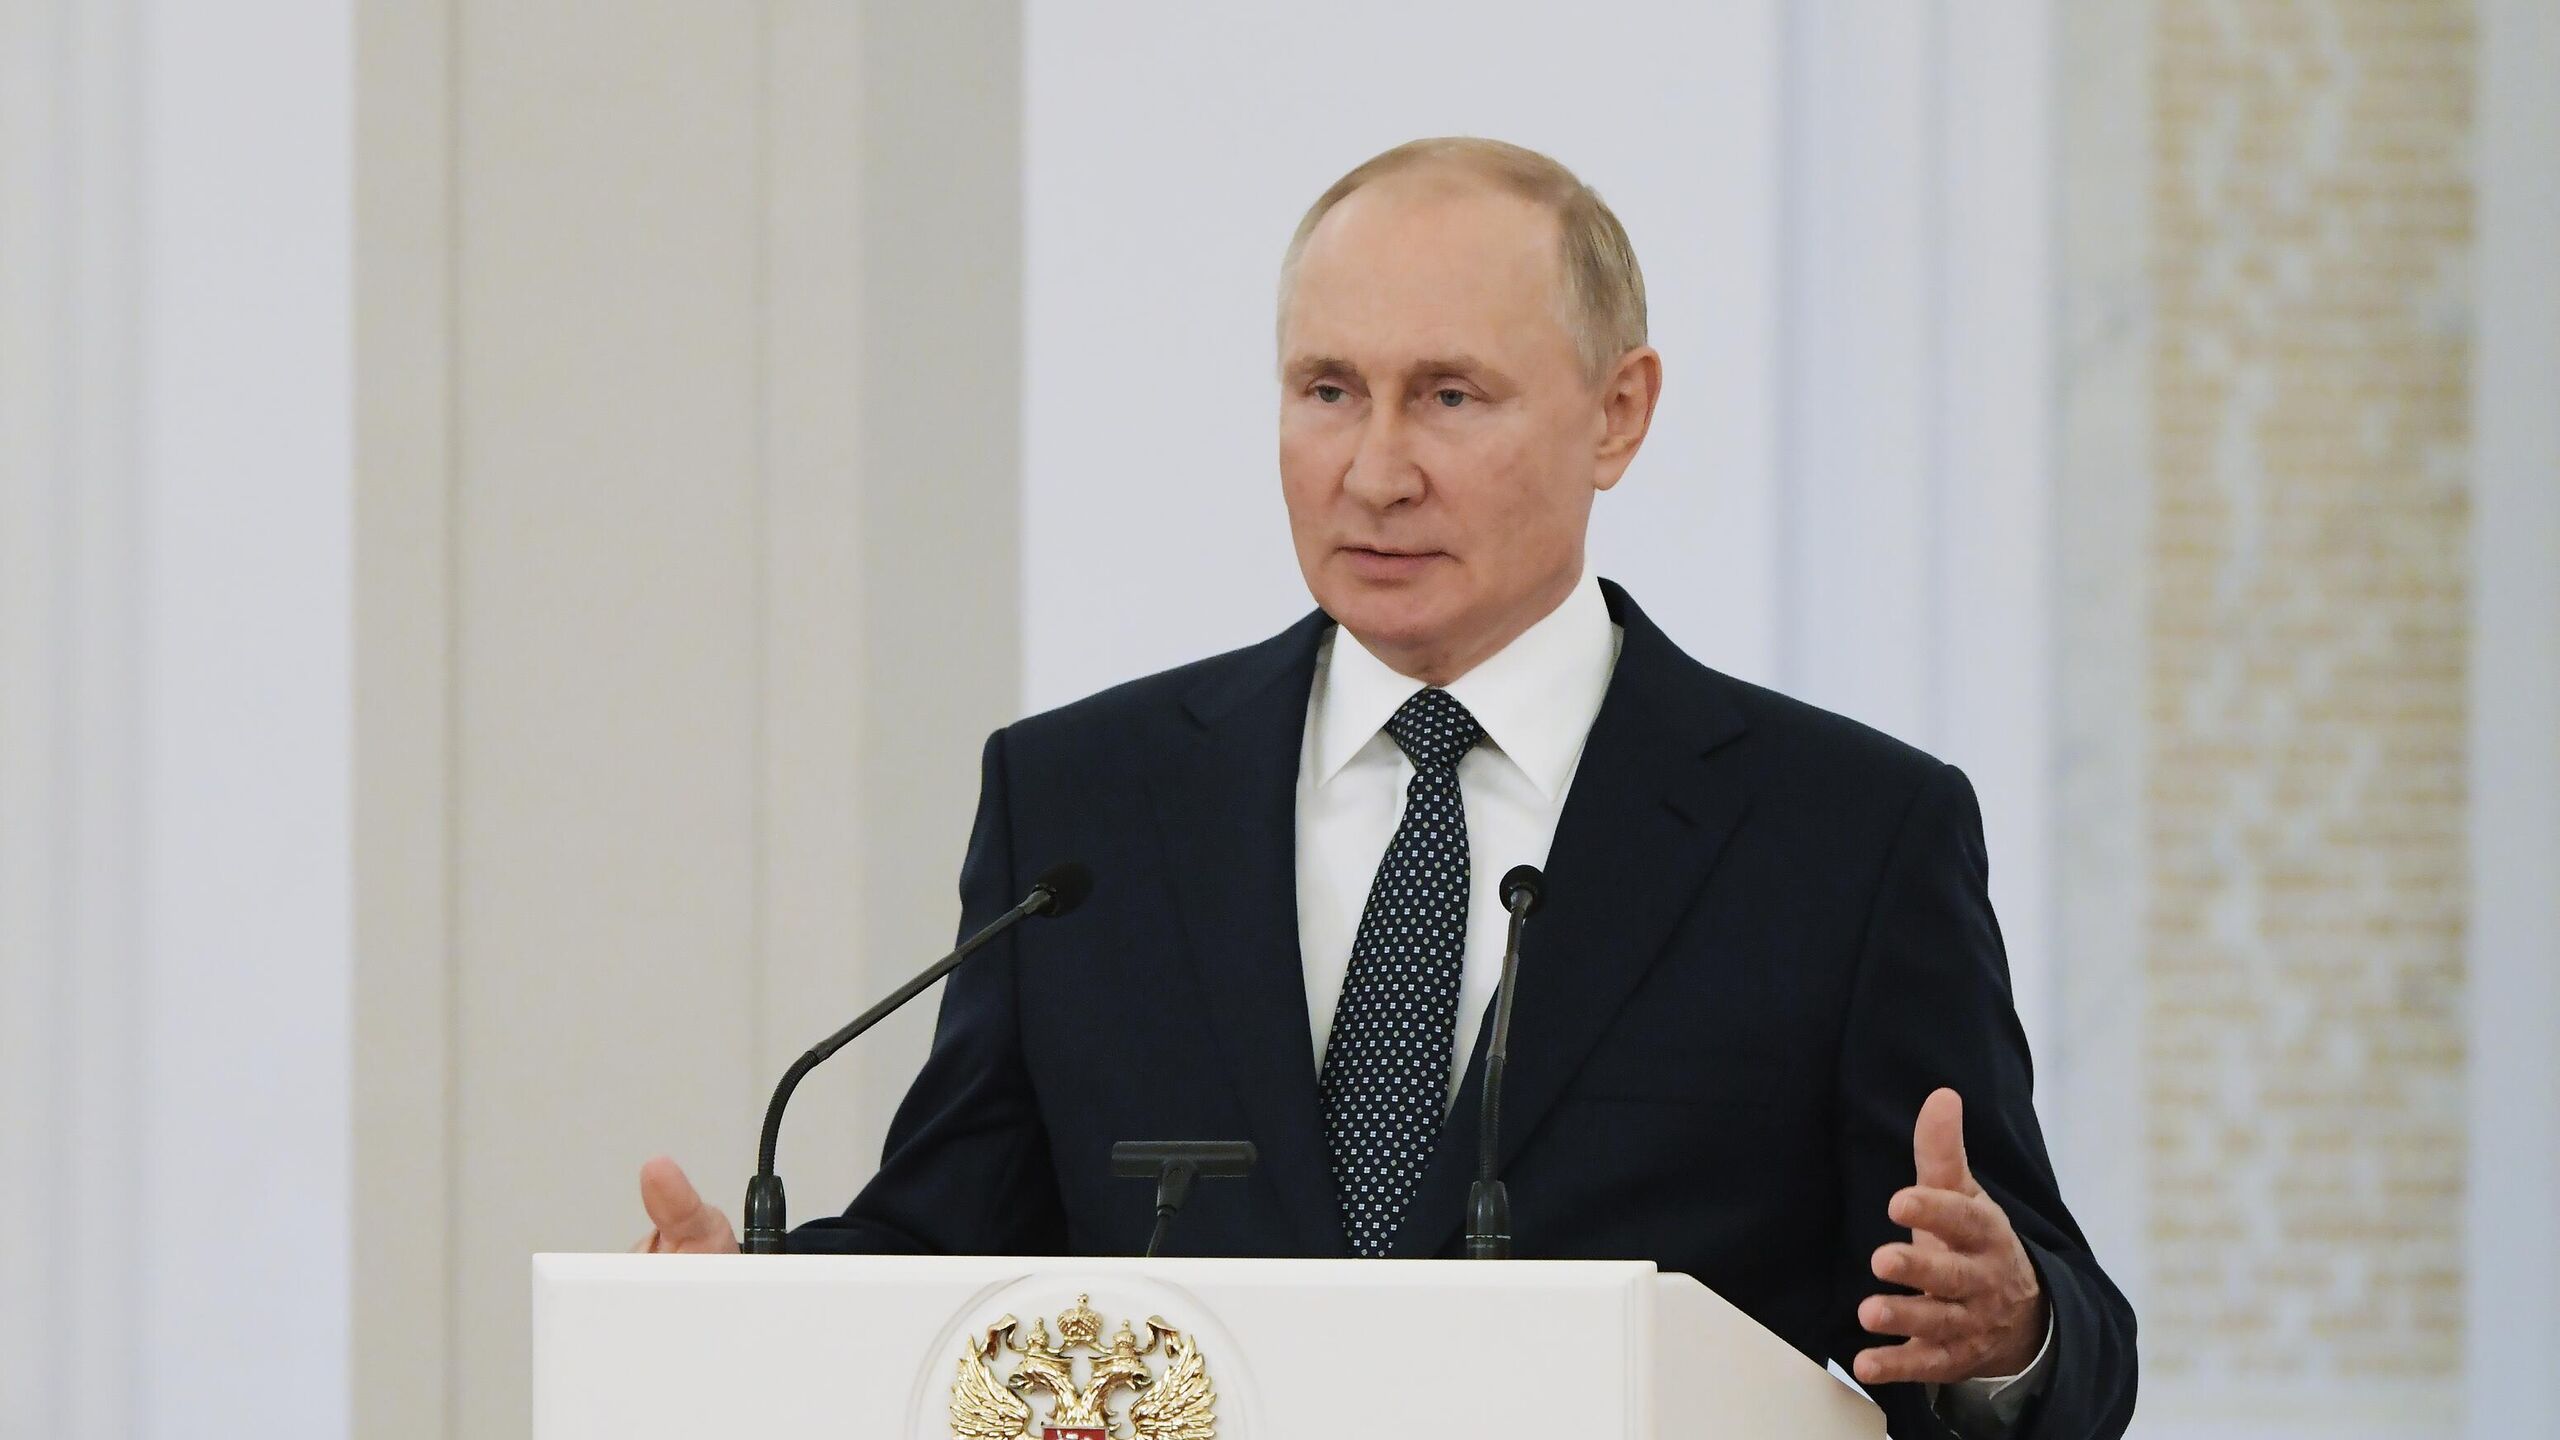 Lebih dari 80% orang Rusia mempercayai Putin, menurut jajak pendapat